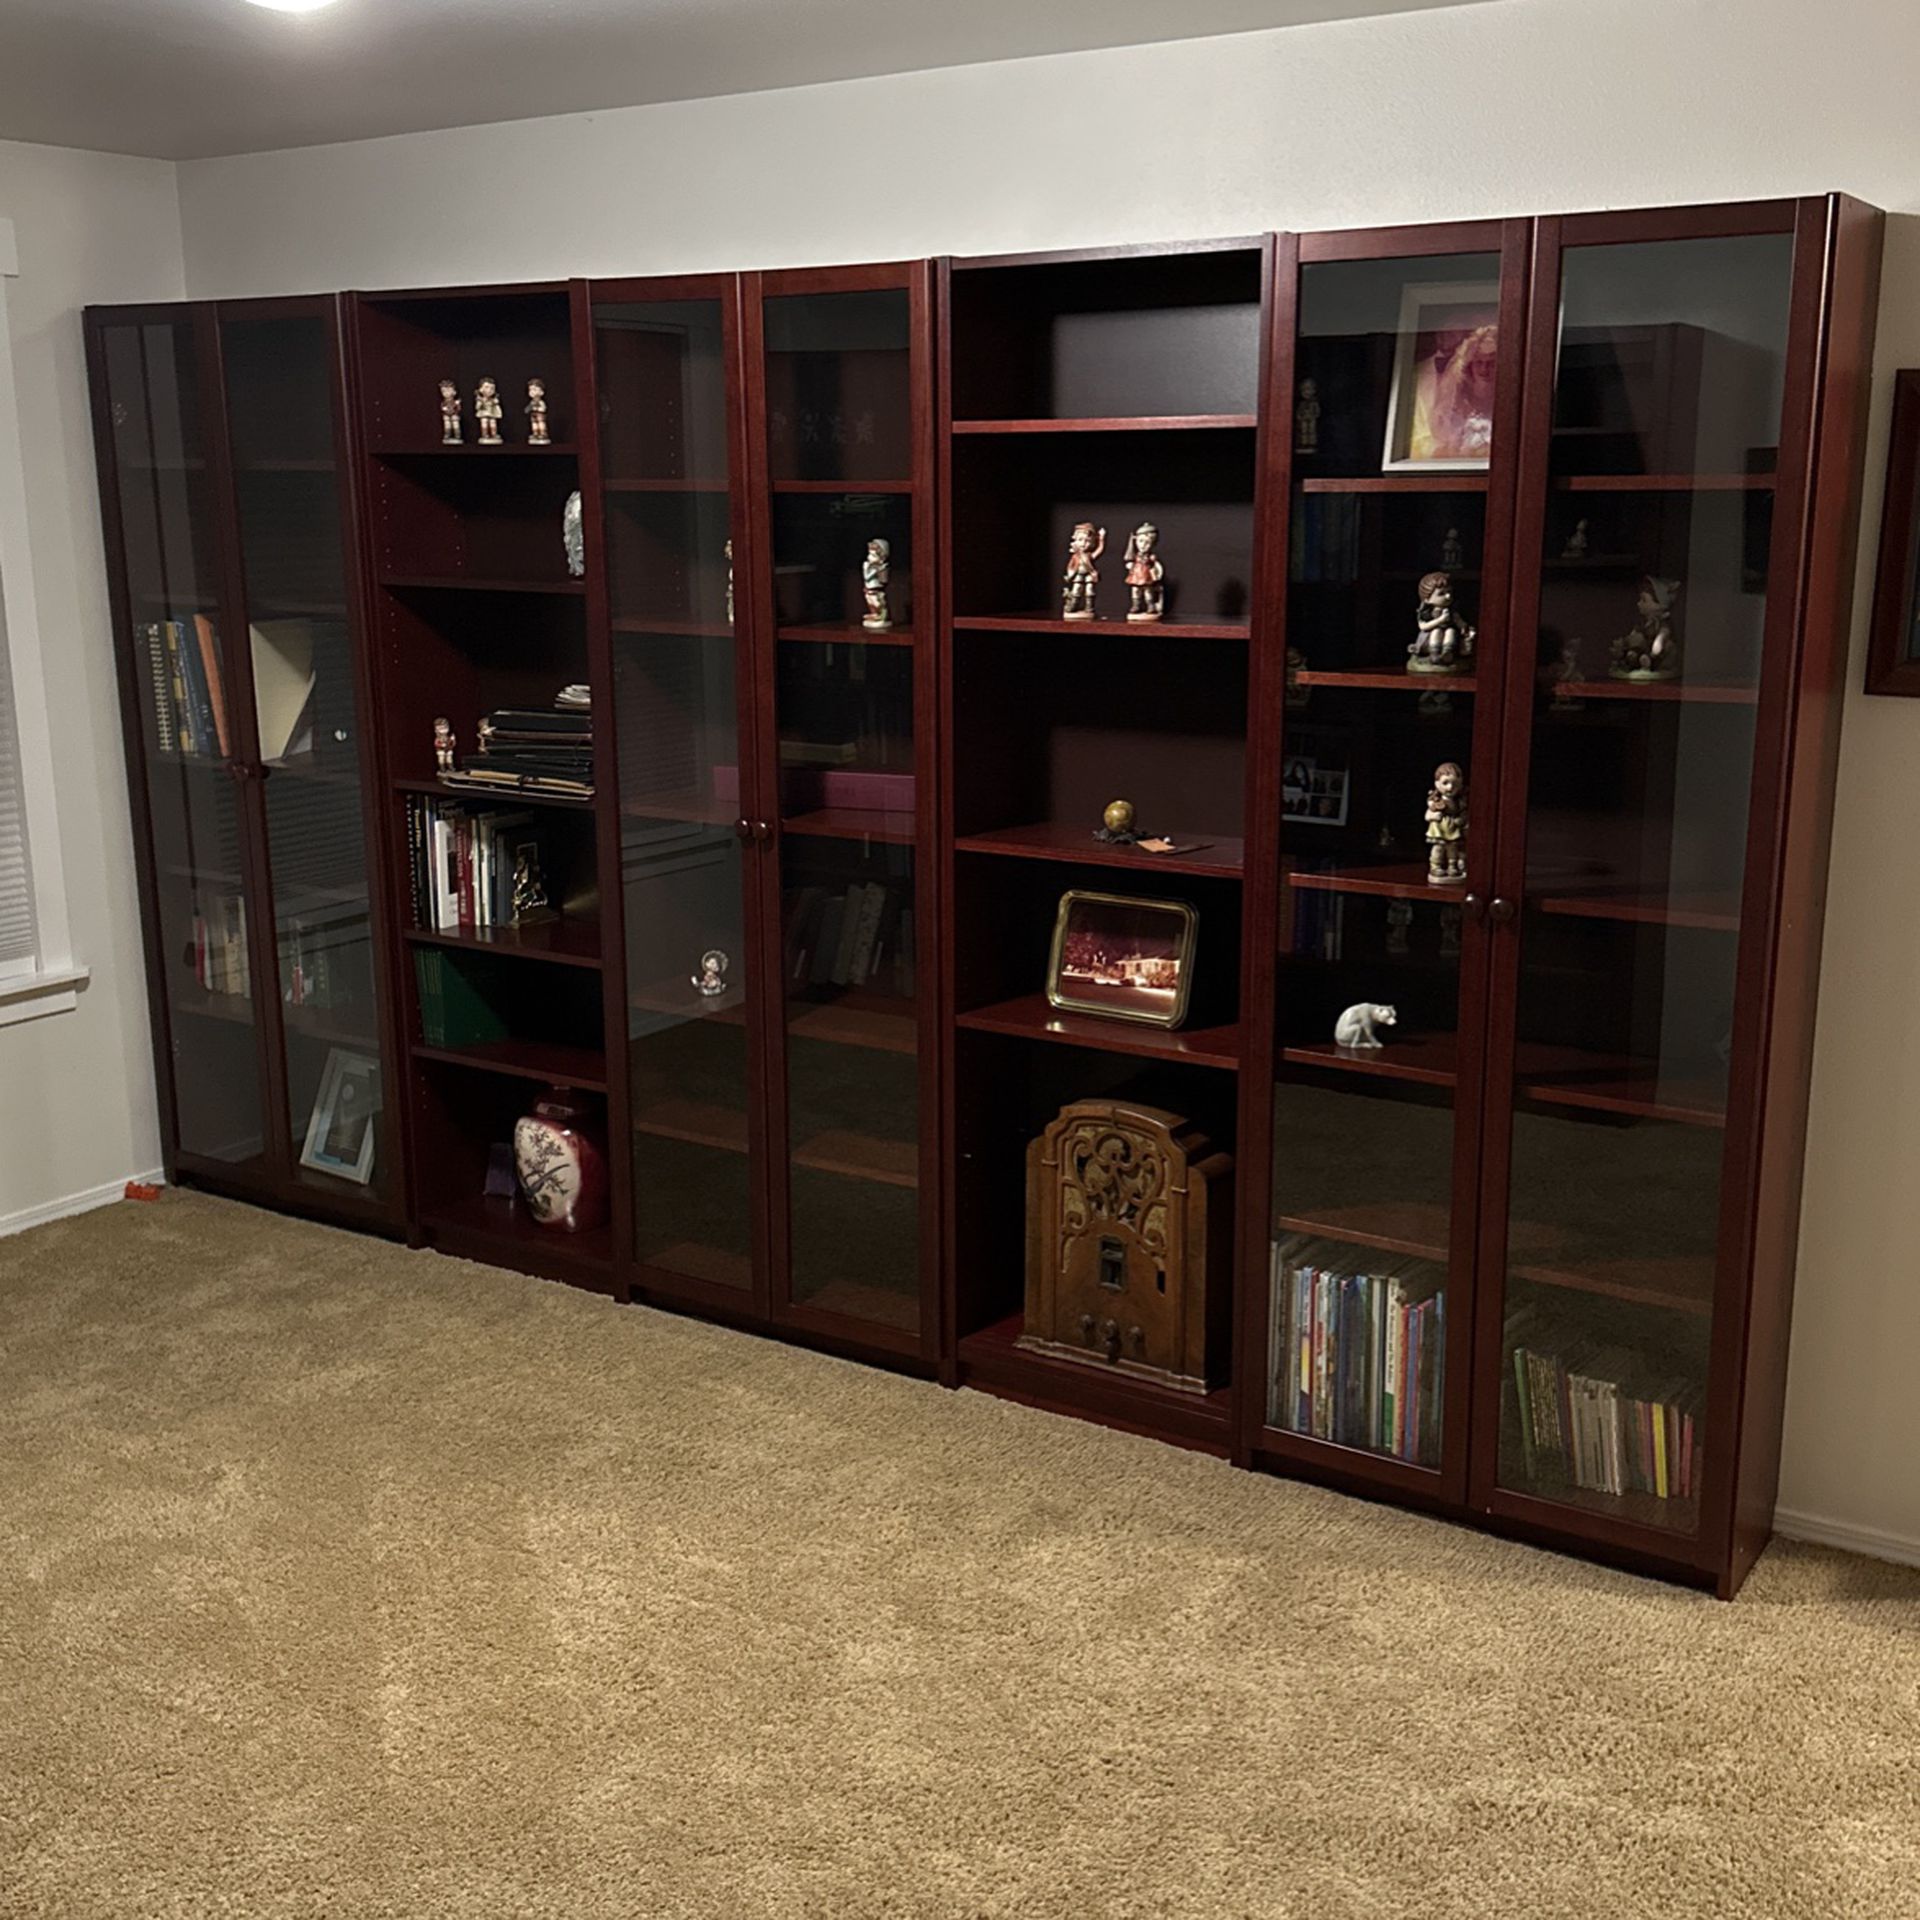 Bookshelf-Library Shelf System 11’ 2” Total Length, 79” High.